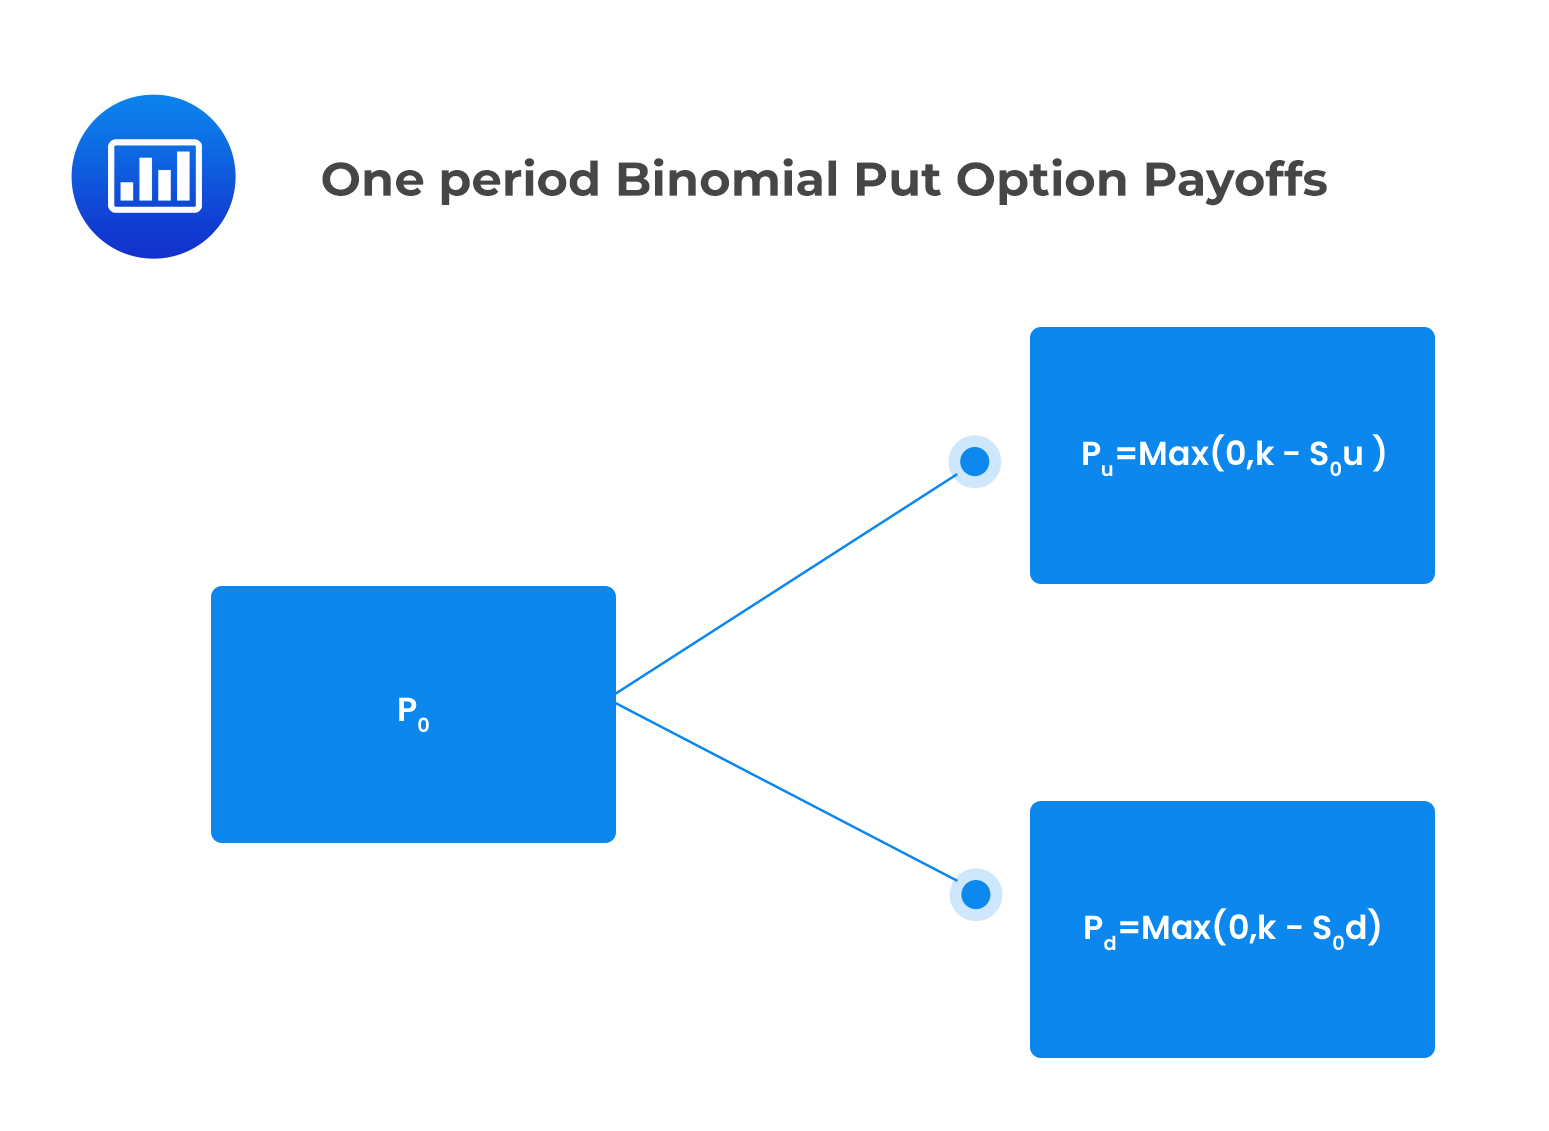 One period Binomial Put Option Payoffs